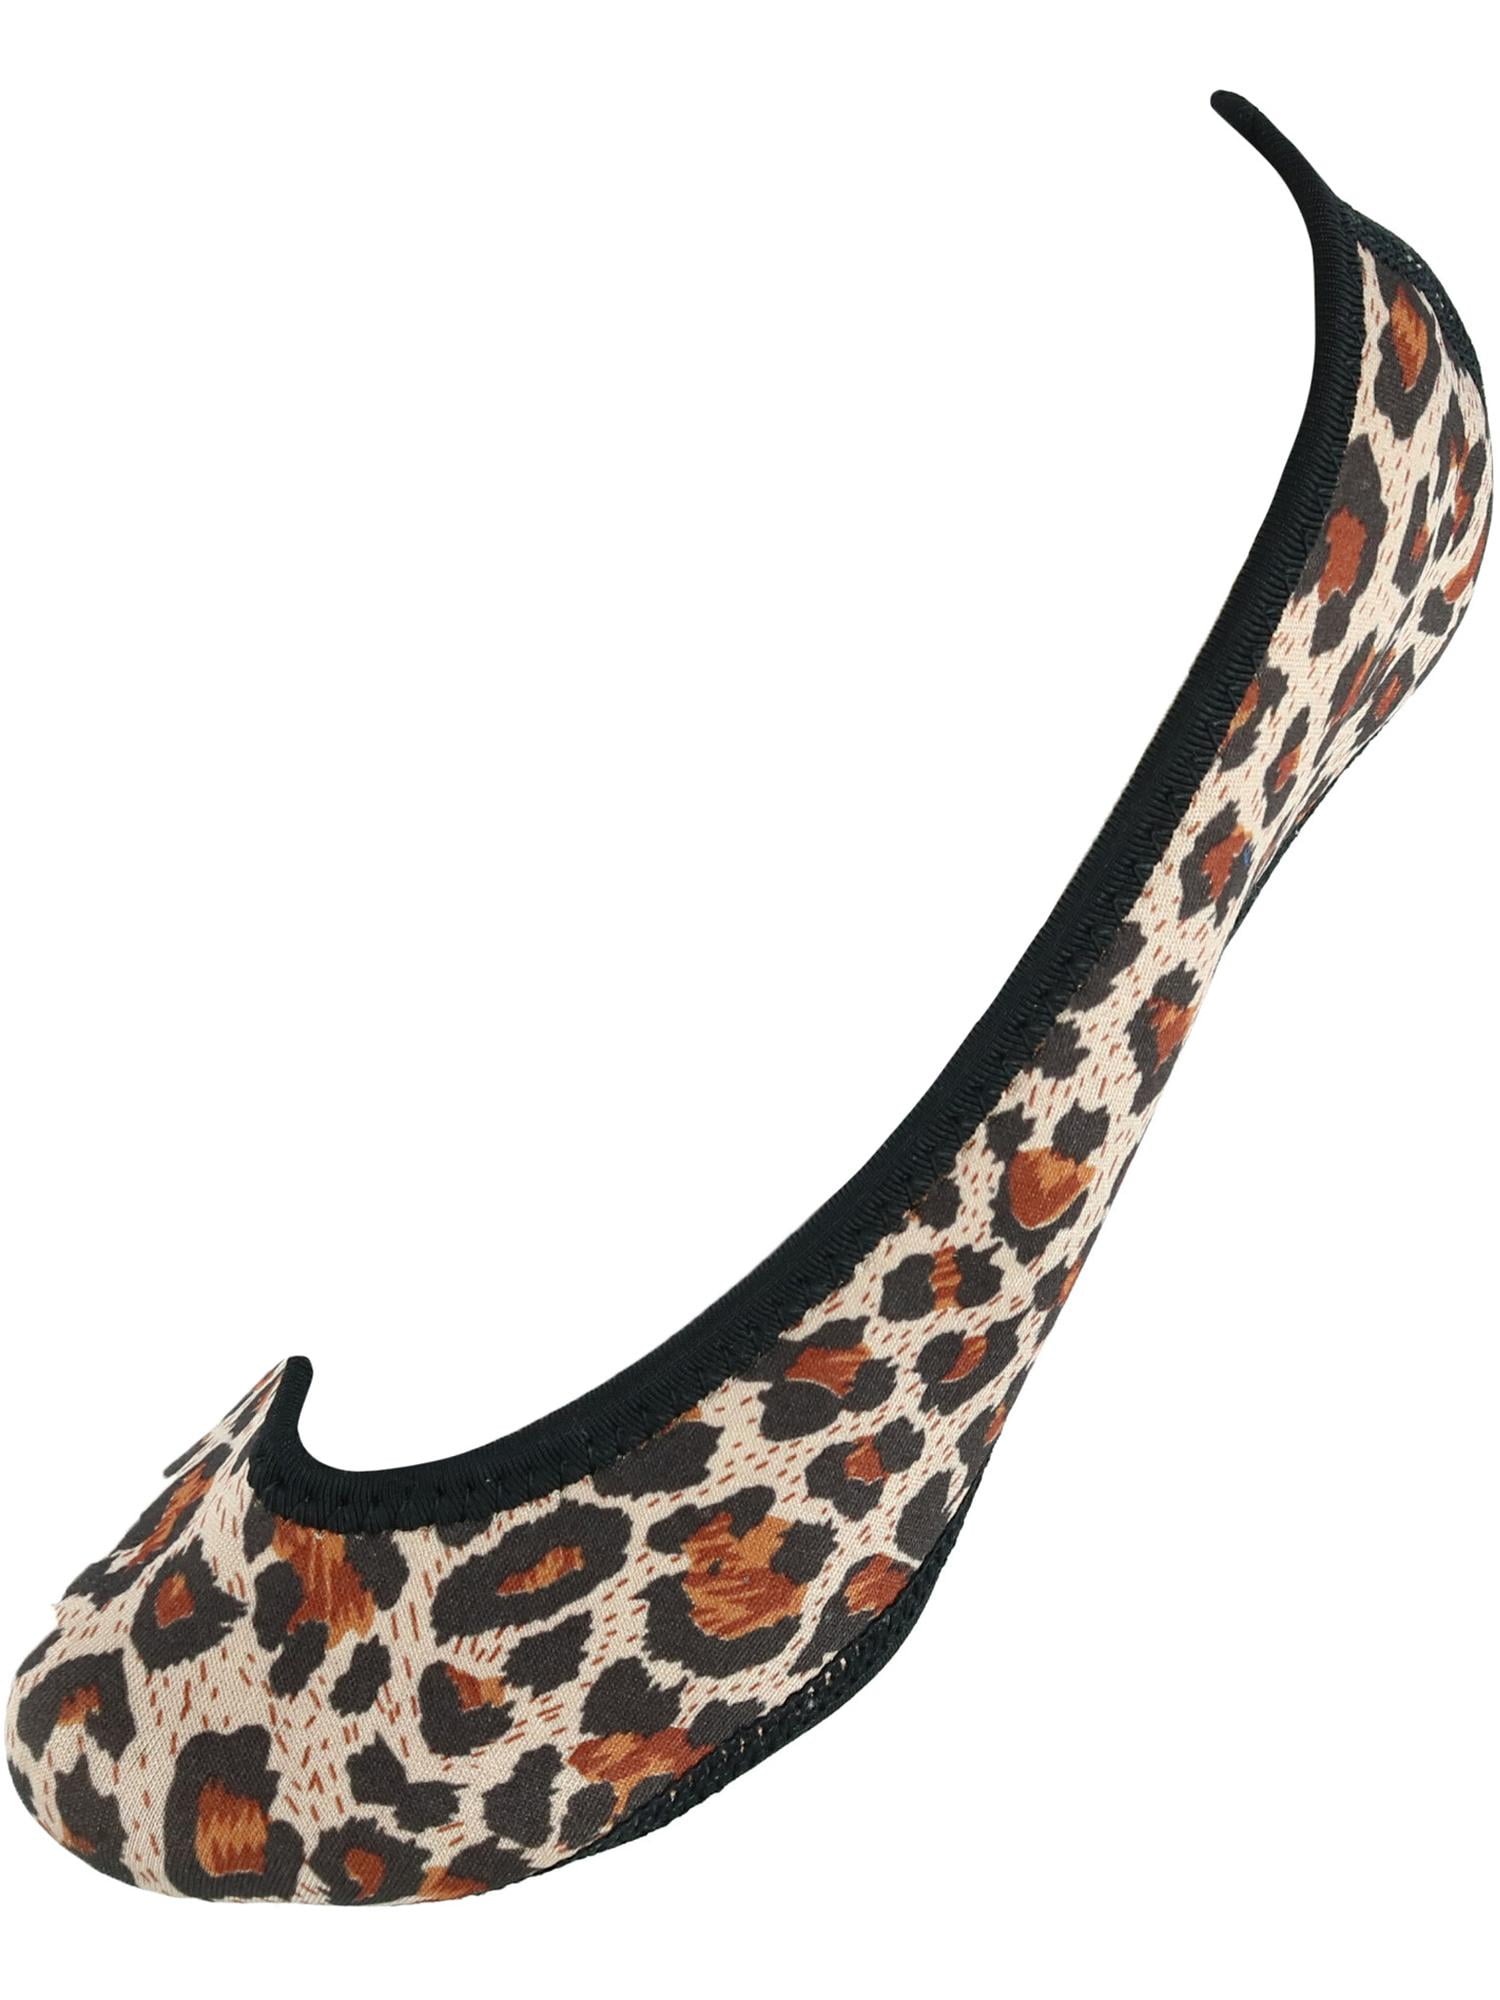 anden pessimist spisekammer Nufoot Leopard Print Stretch Neoprene Ballerina Slipper Shoes (Women's) -  Walmart.com